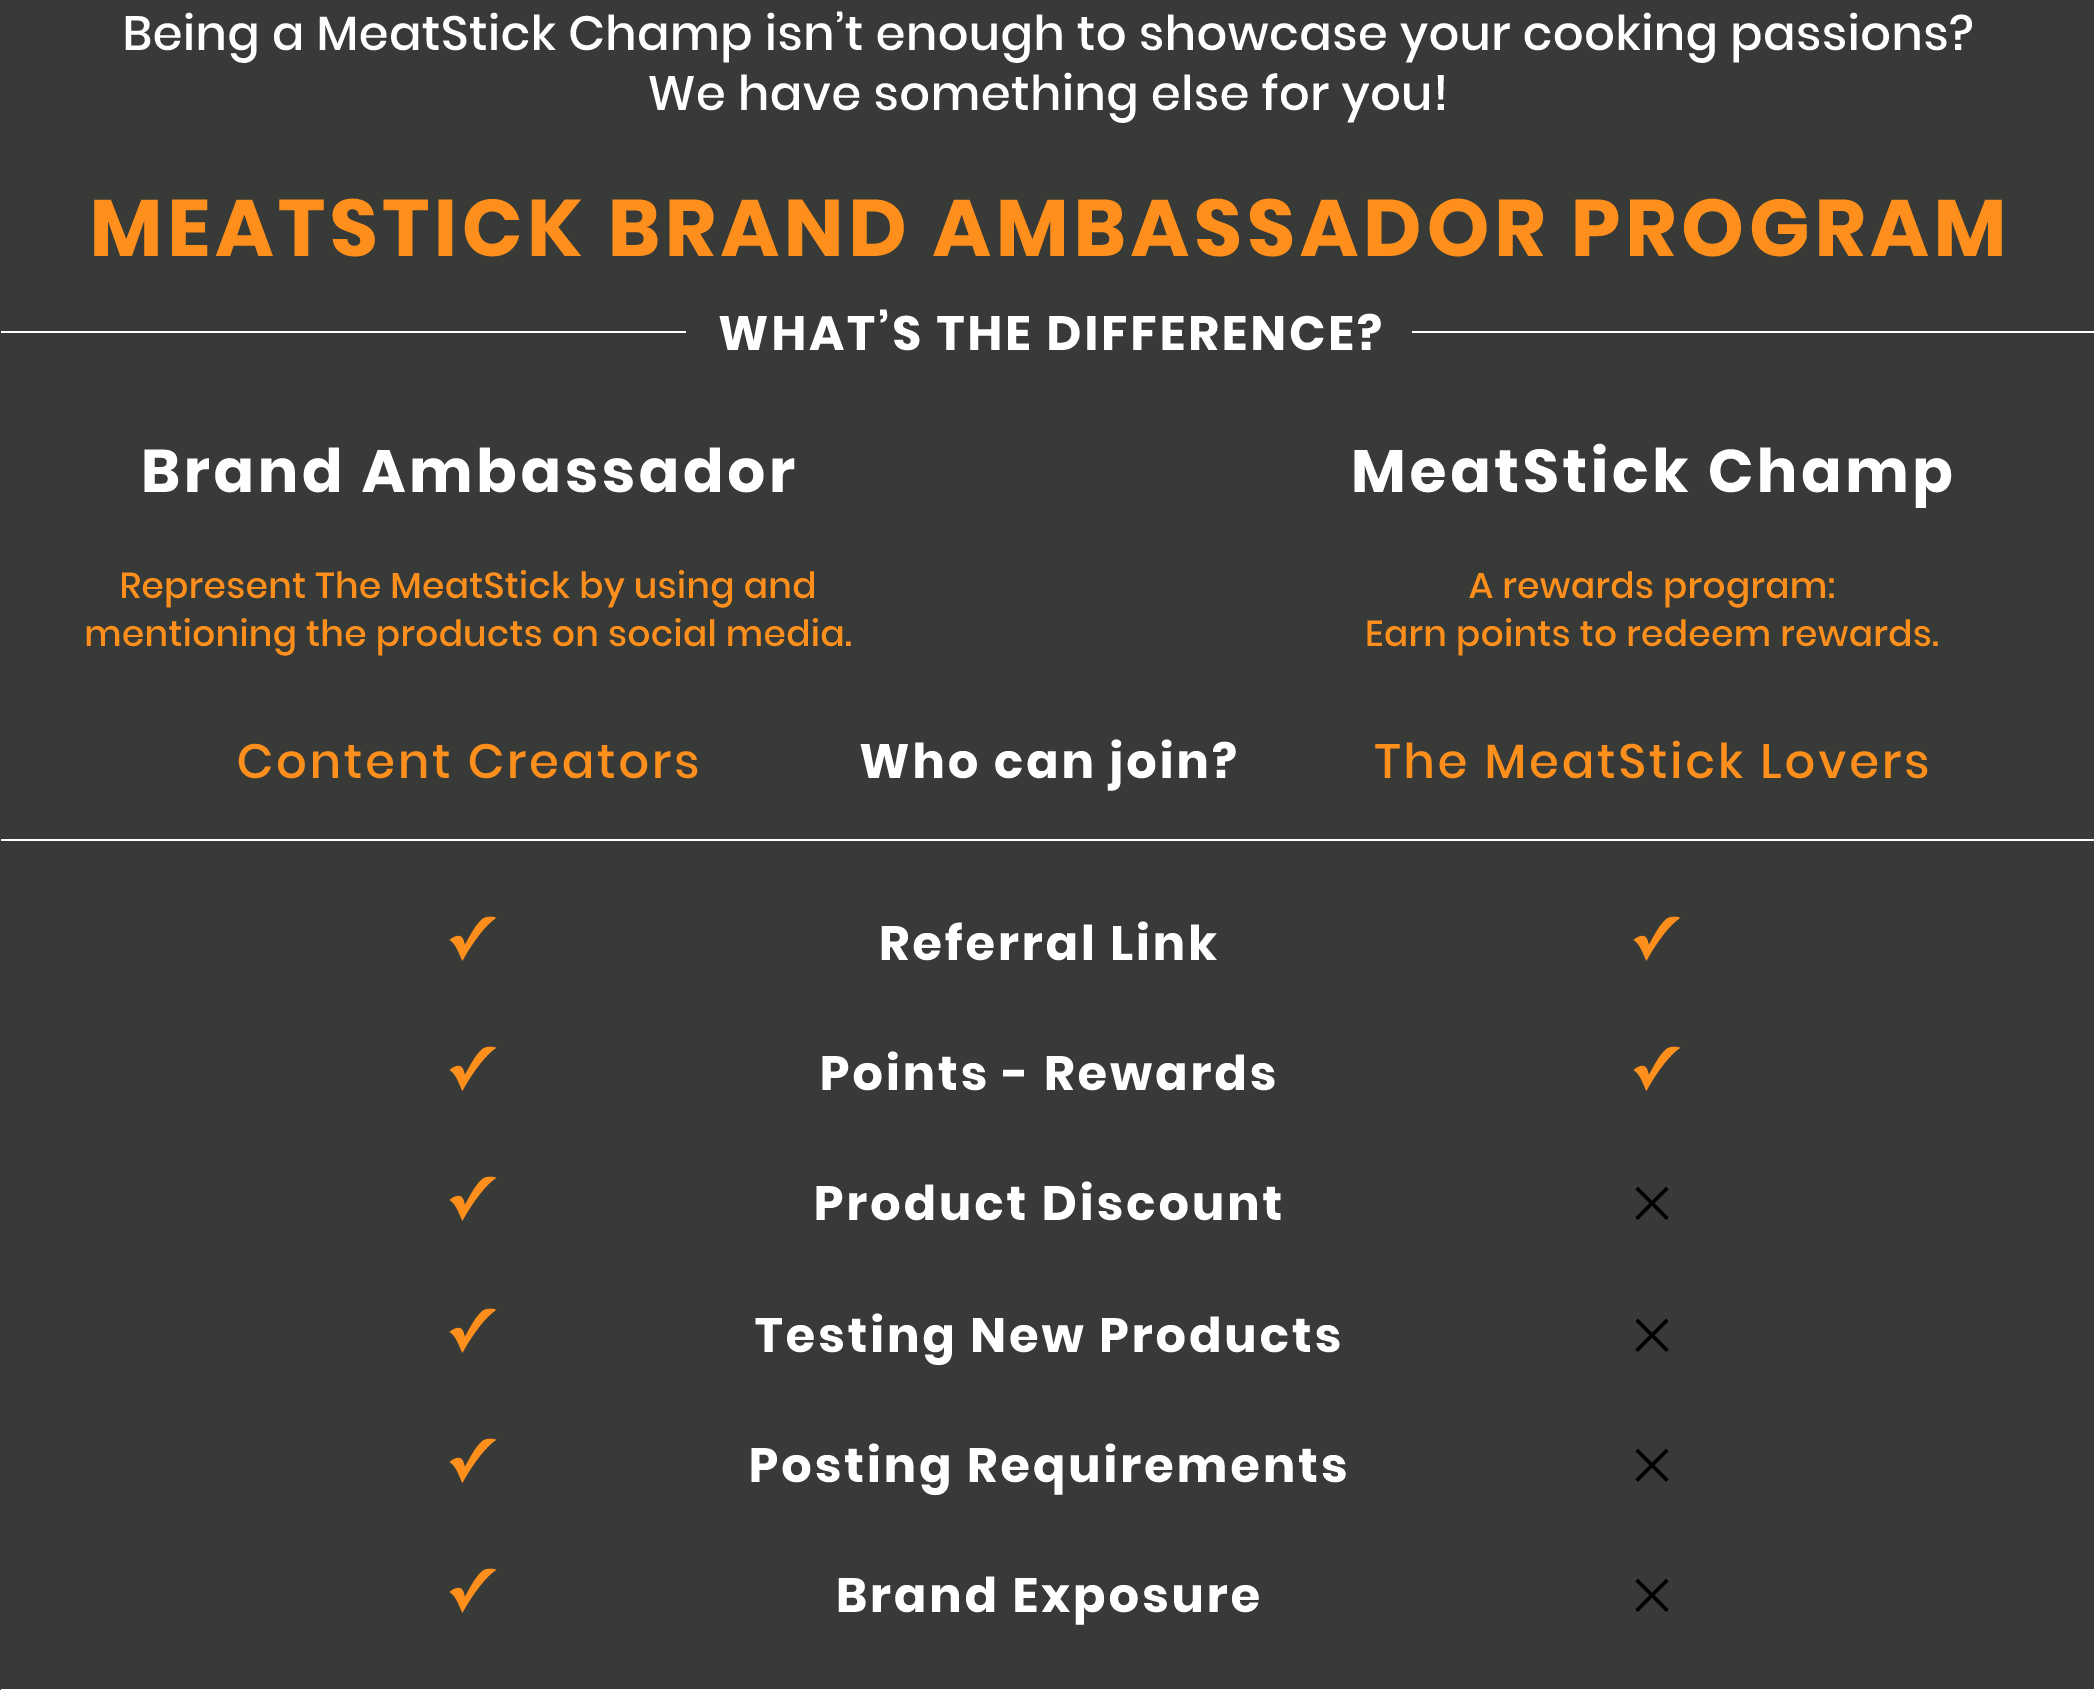 MeatStick Brand Ambassador vs. MeatStick Champ